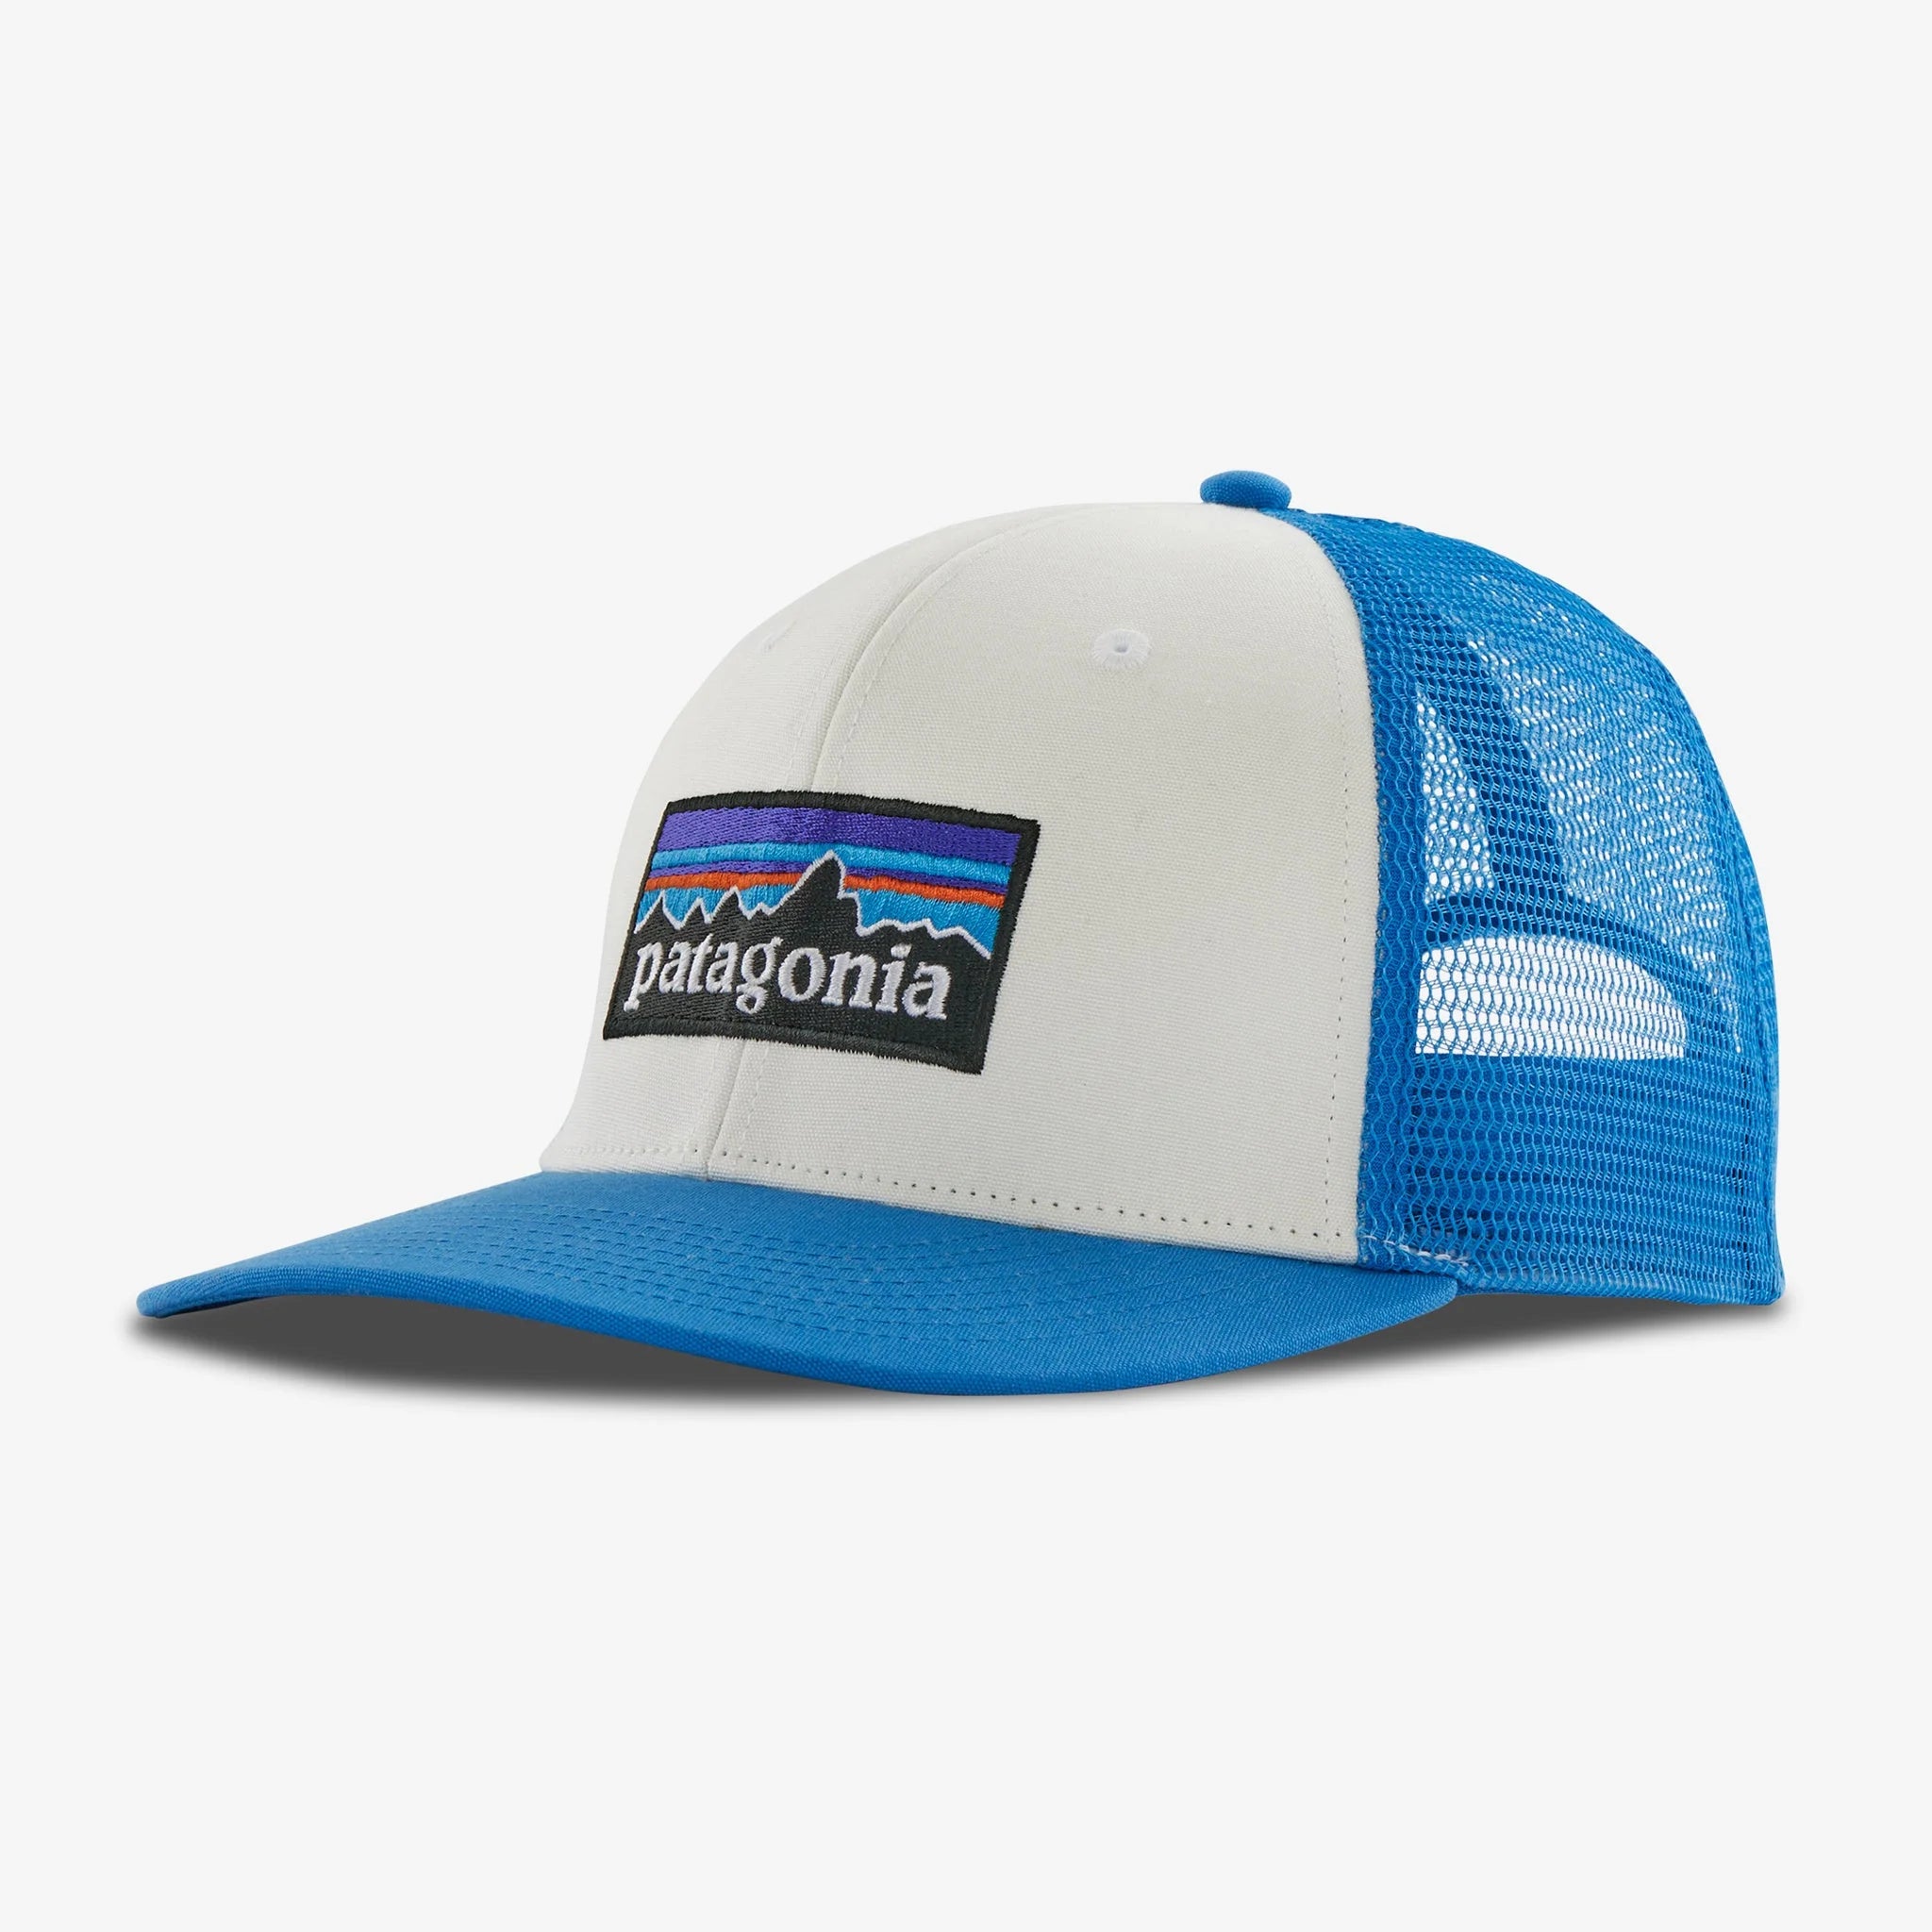 Patagonia P-6 Logo Trucker Hat (Unisex) - White w/Vessel Blue - Find Your Feet Australia Hobart Launceston Tasmania